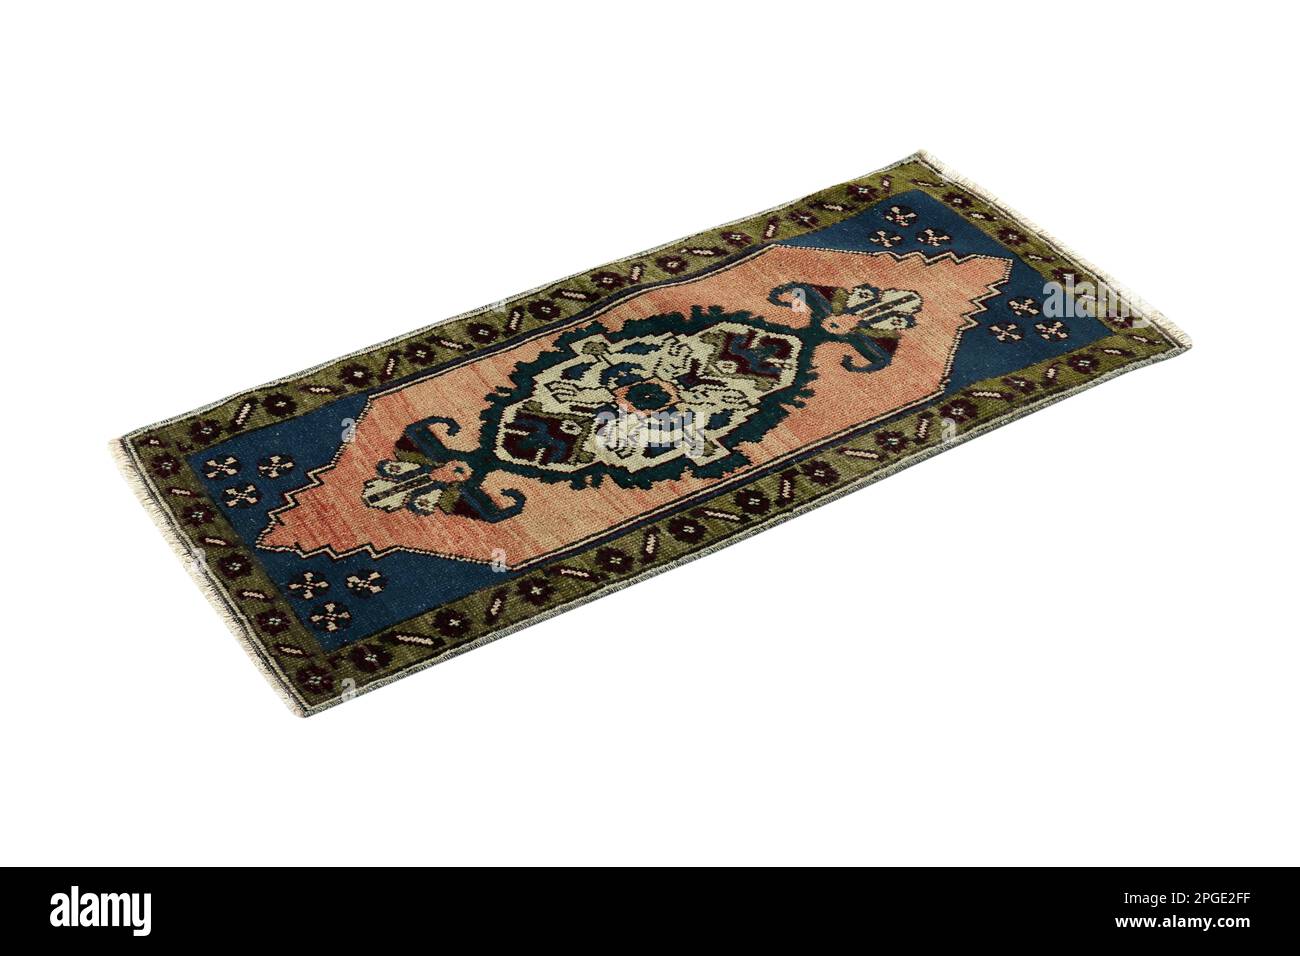 hand-woven, decorative wool Turkish carpet Stock Photo